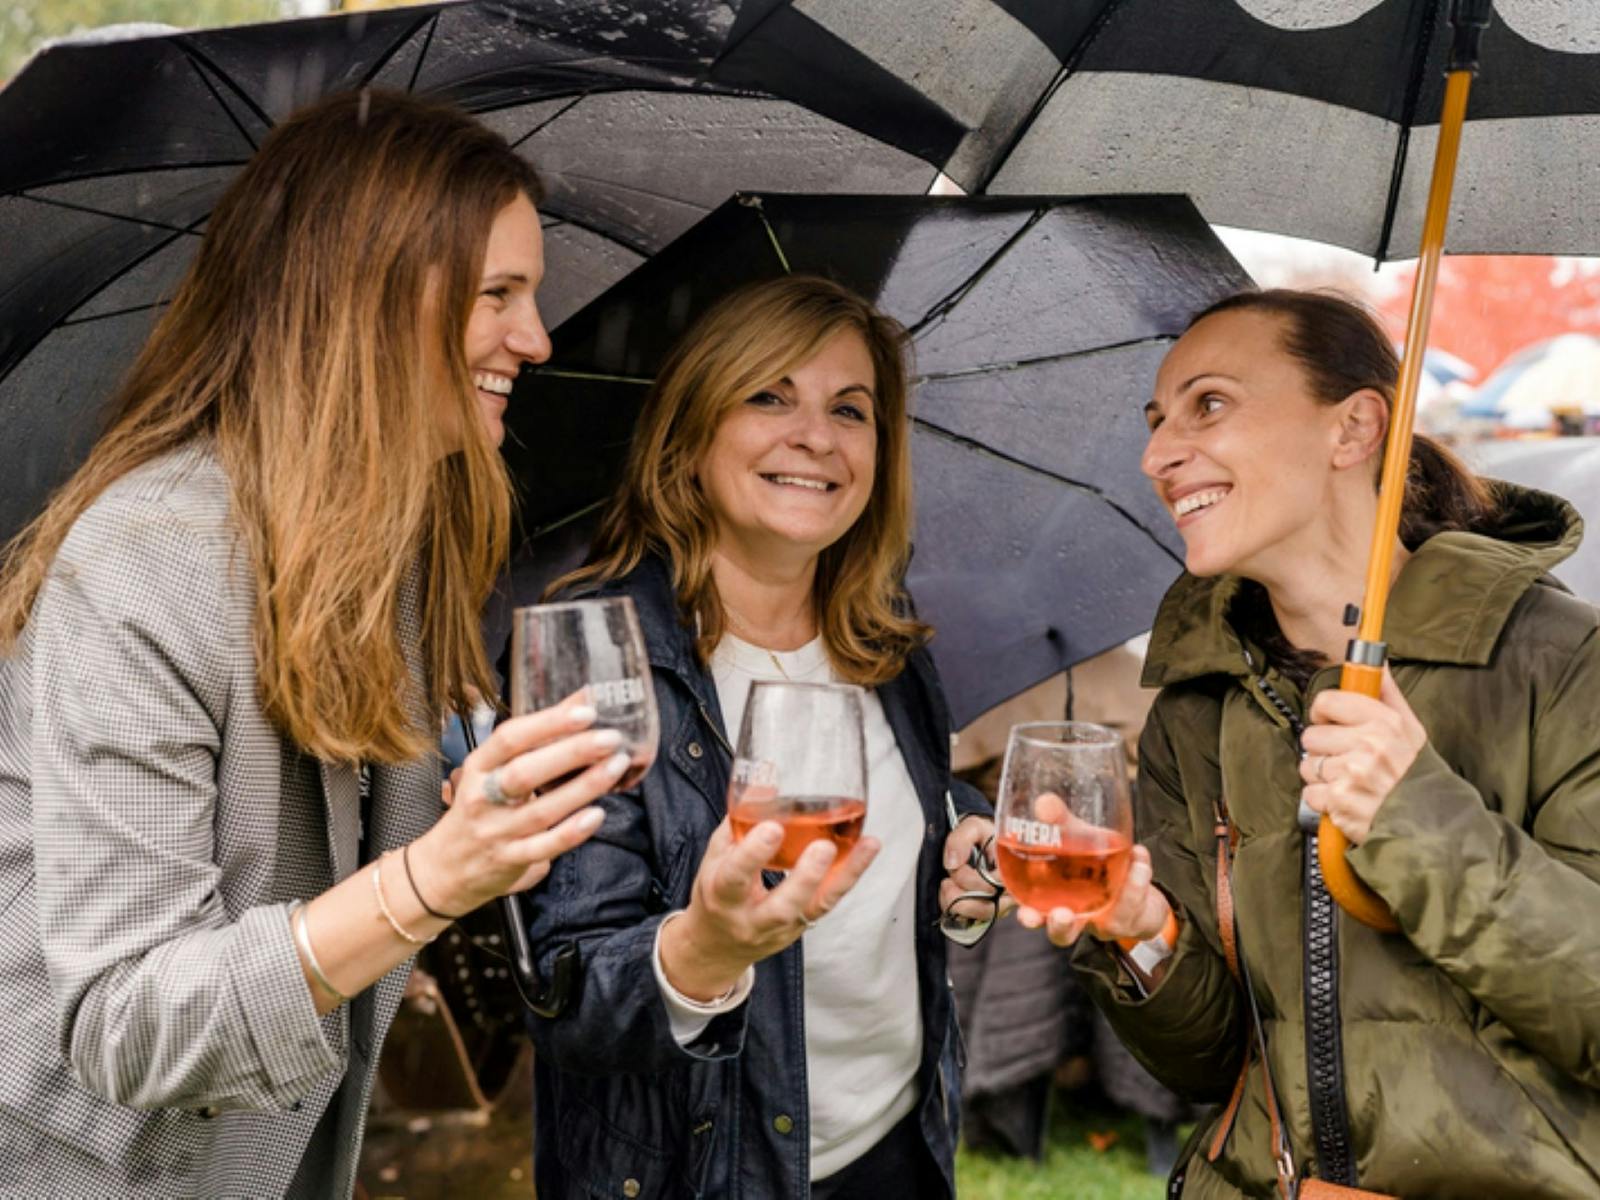 Women enjoying wine